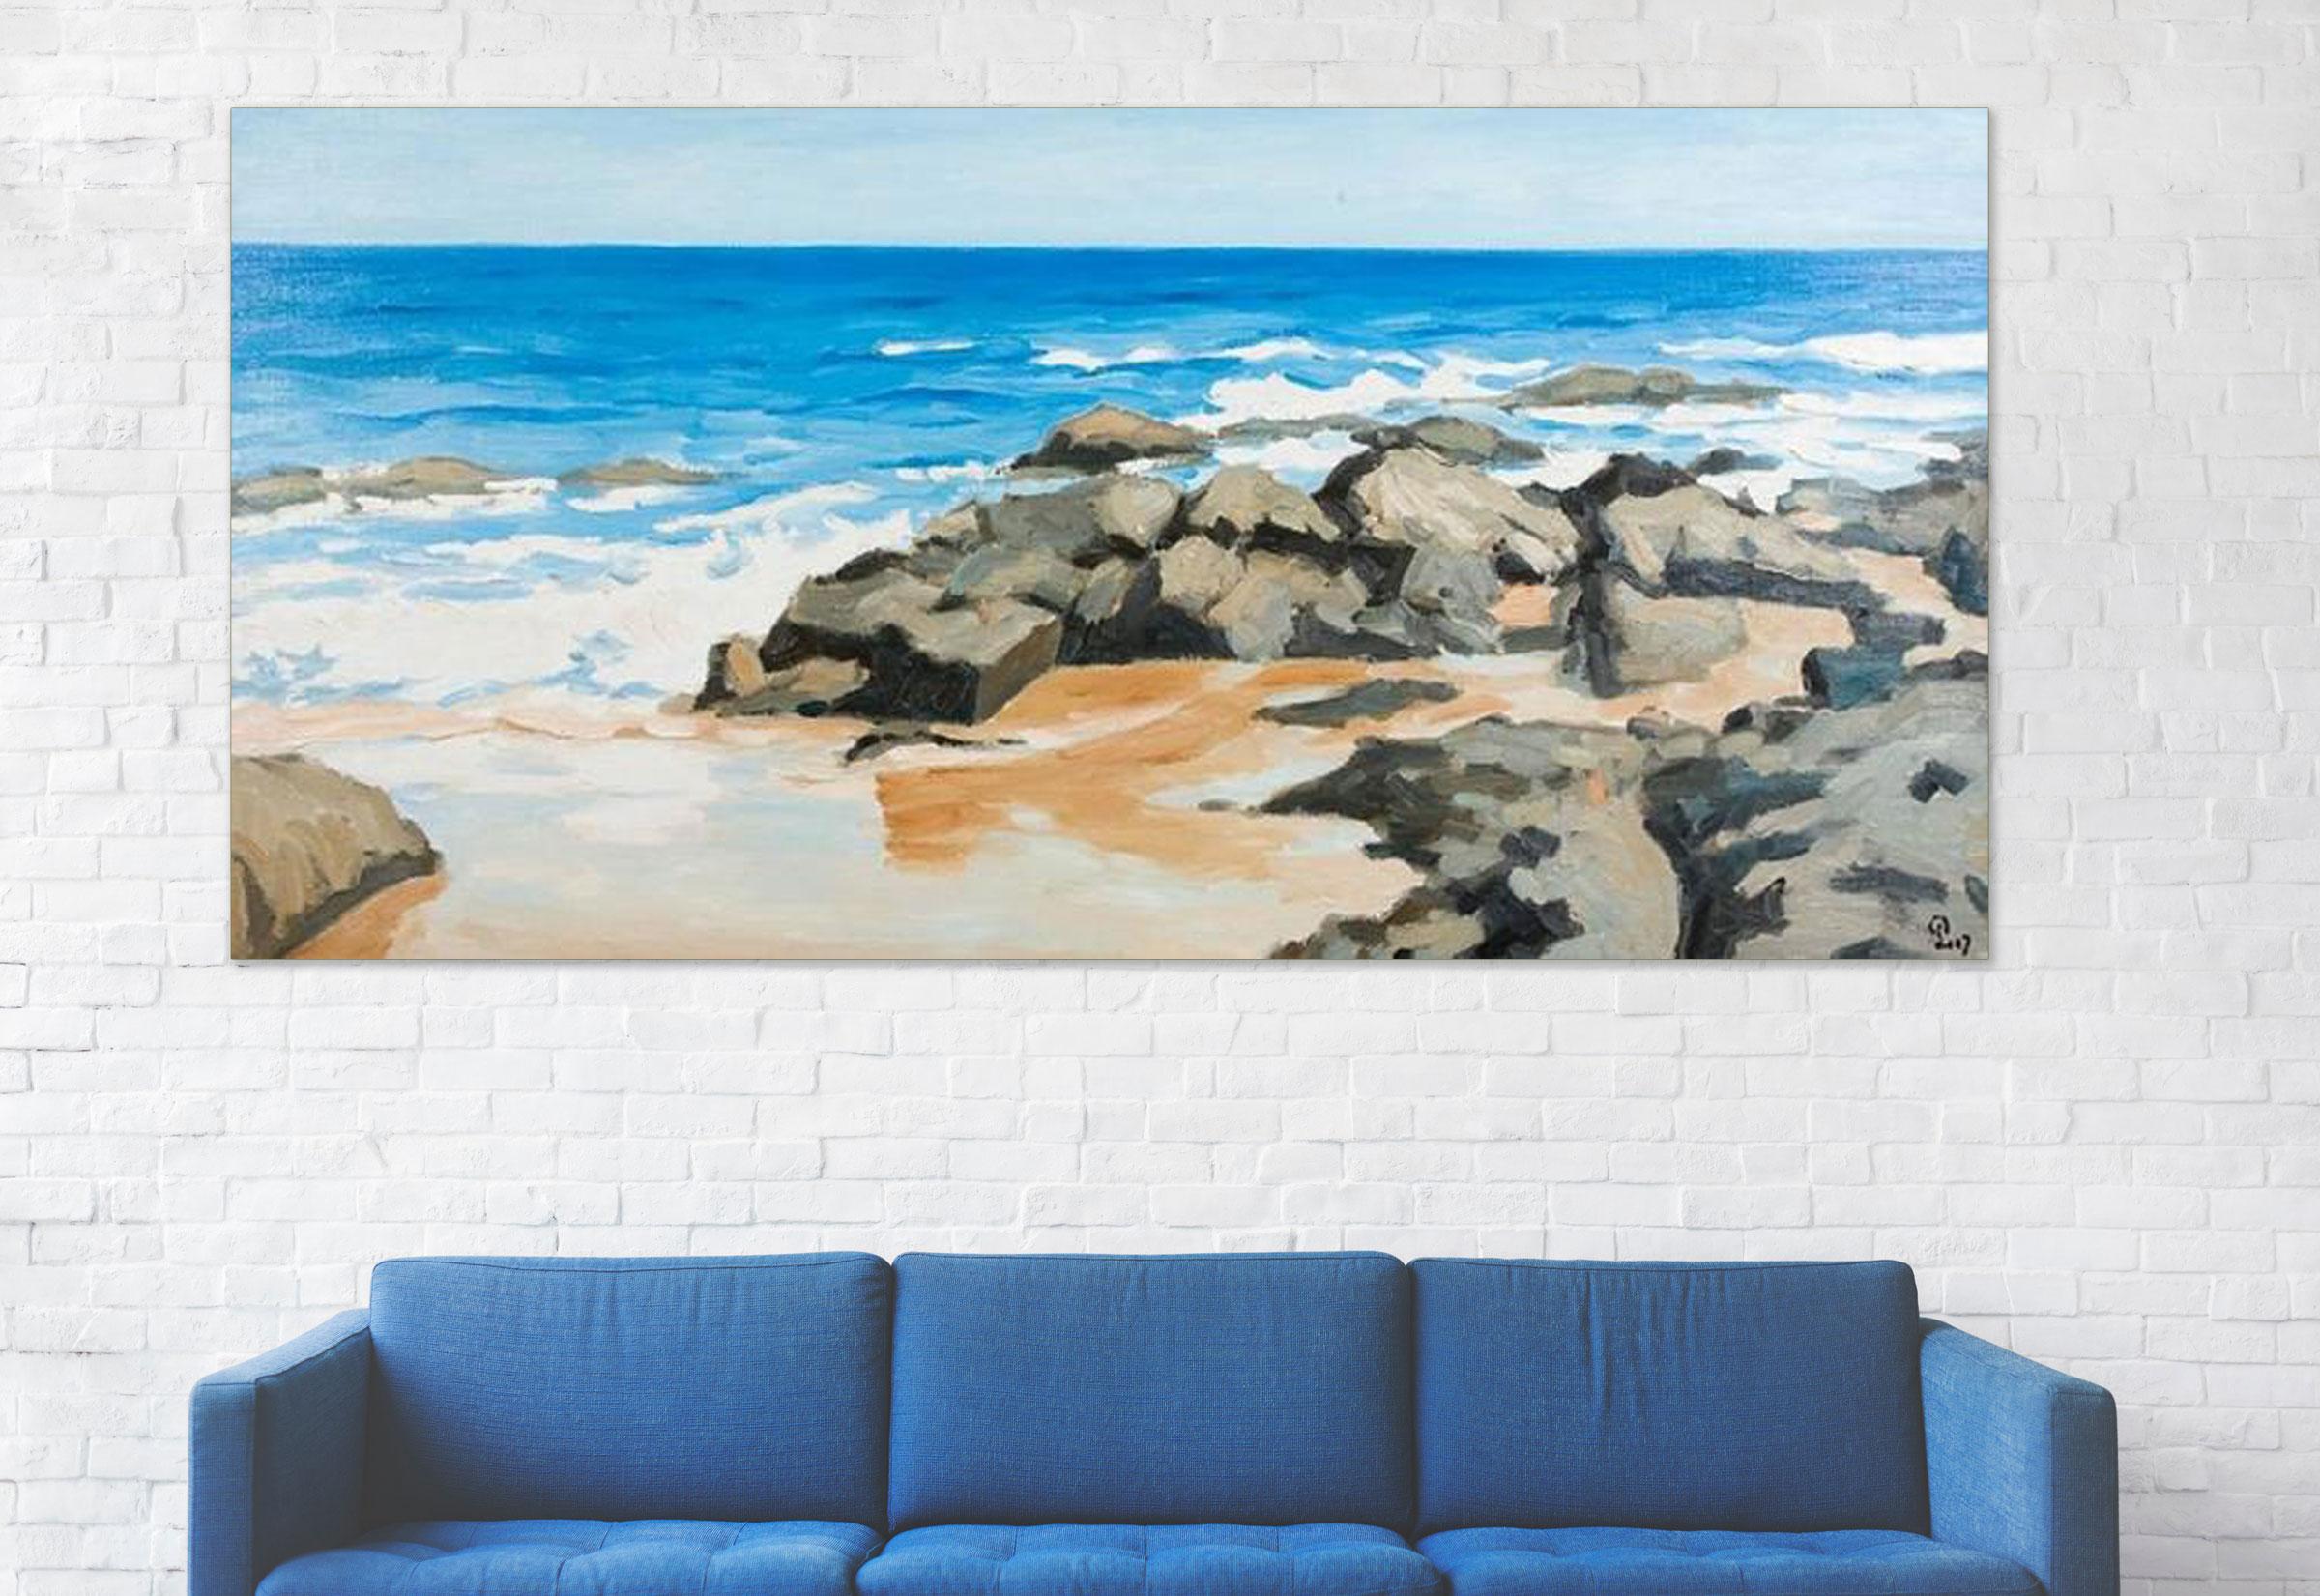 Saui Son Beach by Pham Luan, Large Impressionist Oil on Canvas Seascape Painting 1